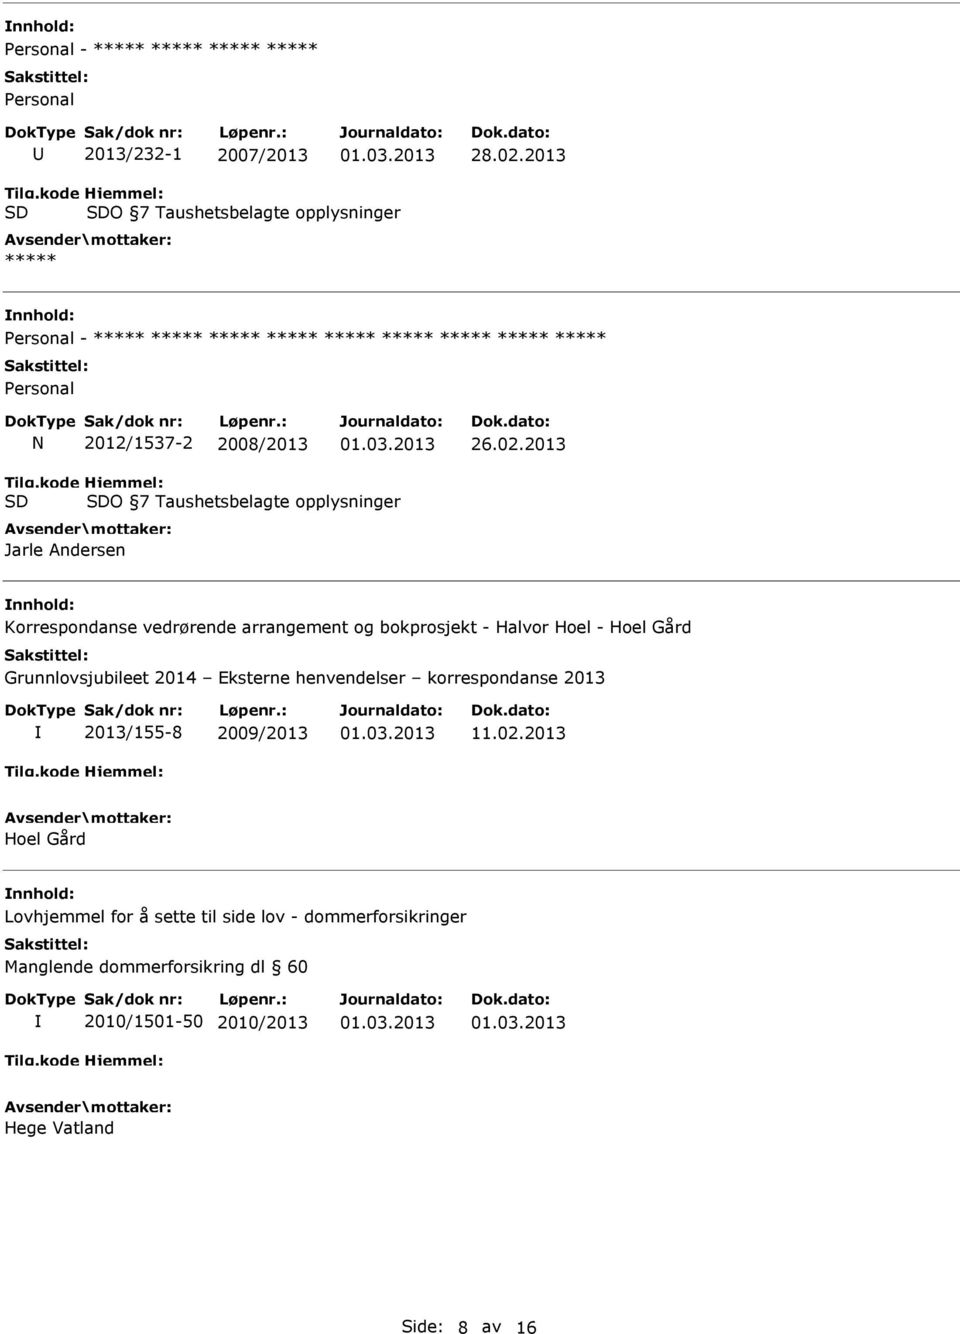 Korrespondanse vedrørende arrangement og bokprosjekt - Halvor Hoel - Hoel Gård 2013/155-8 2009/2013 11.02.